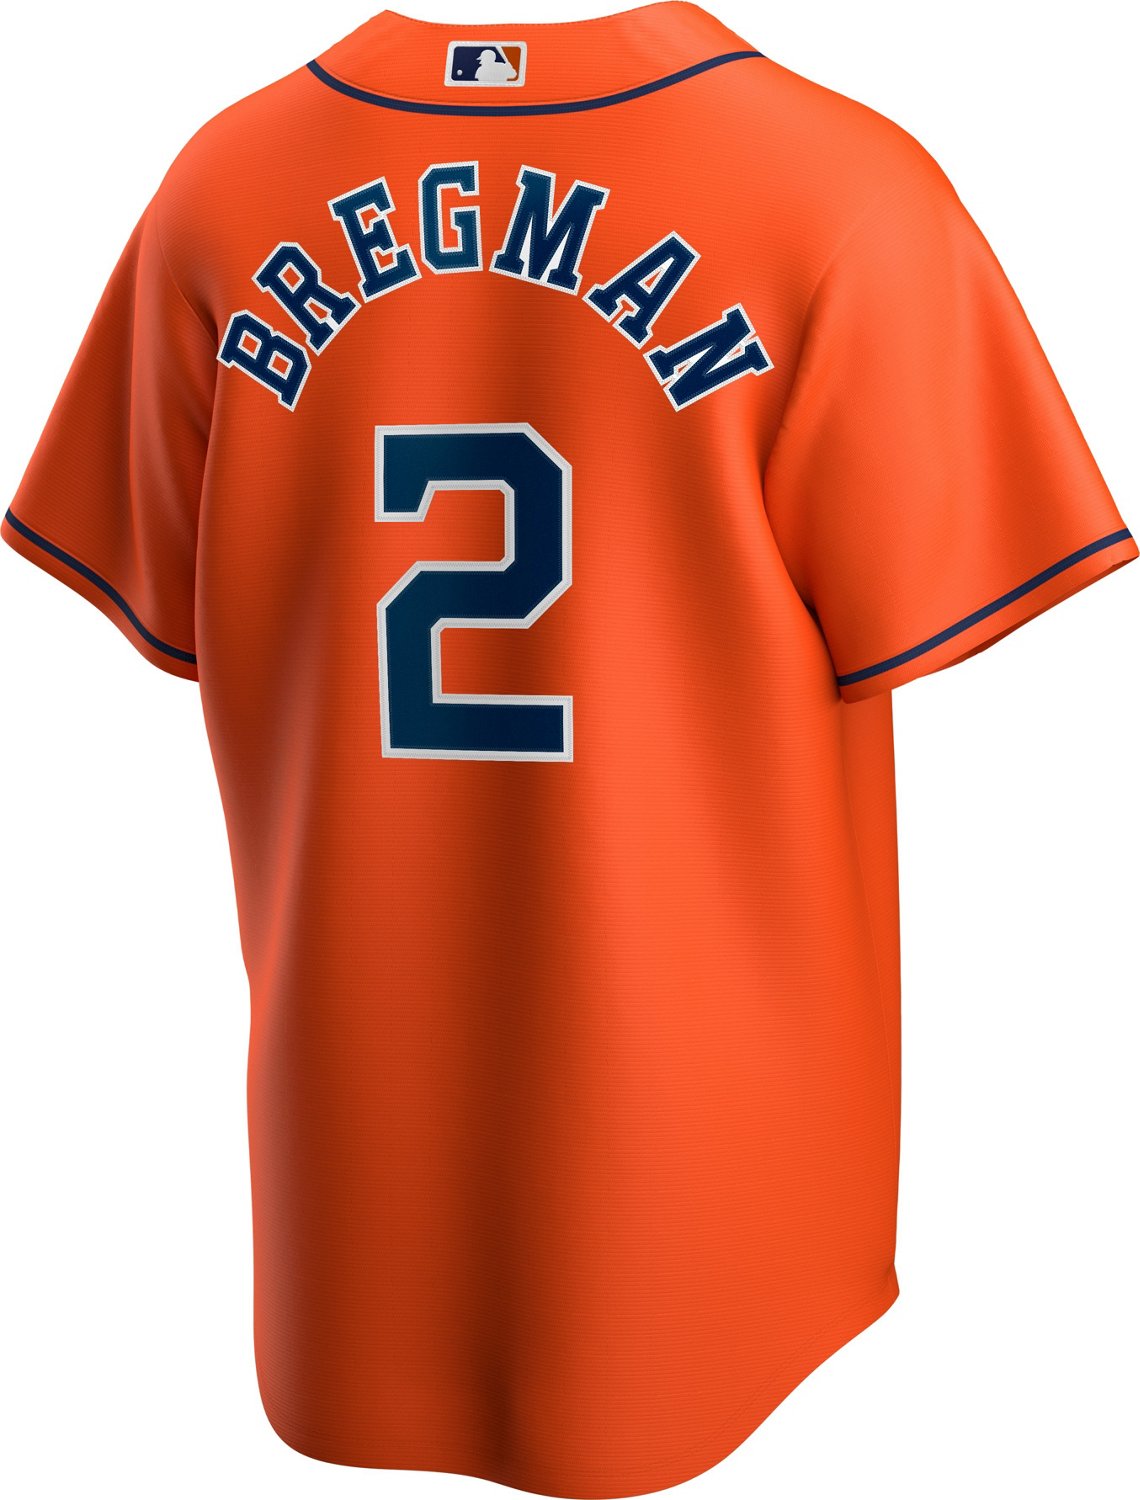 Nike MLB, Shirts, Houston Astros Jersey Bregman Small